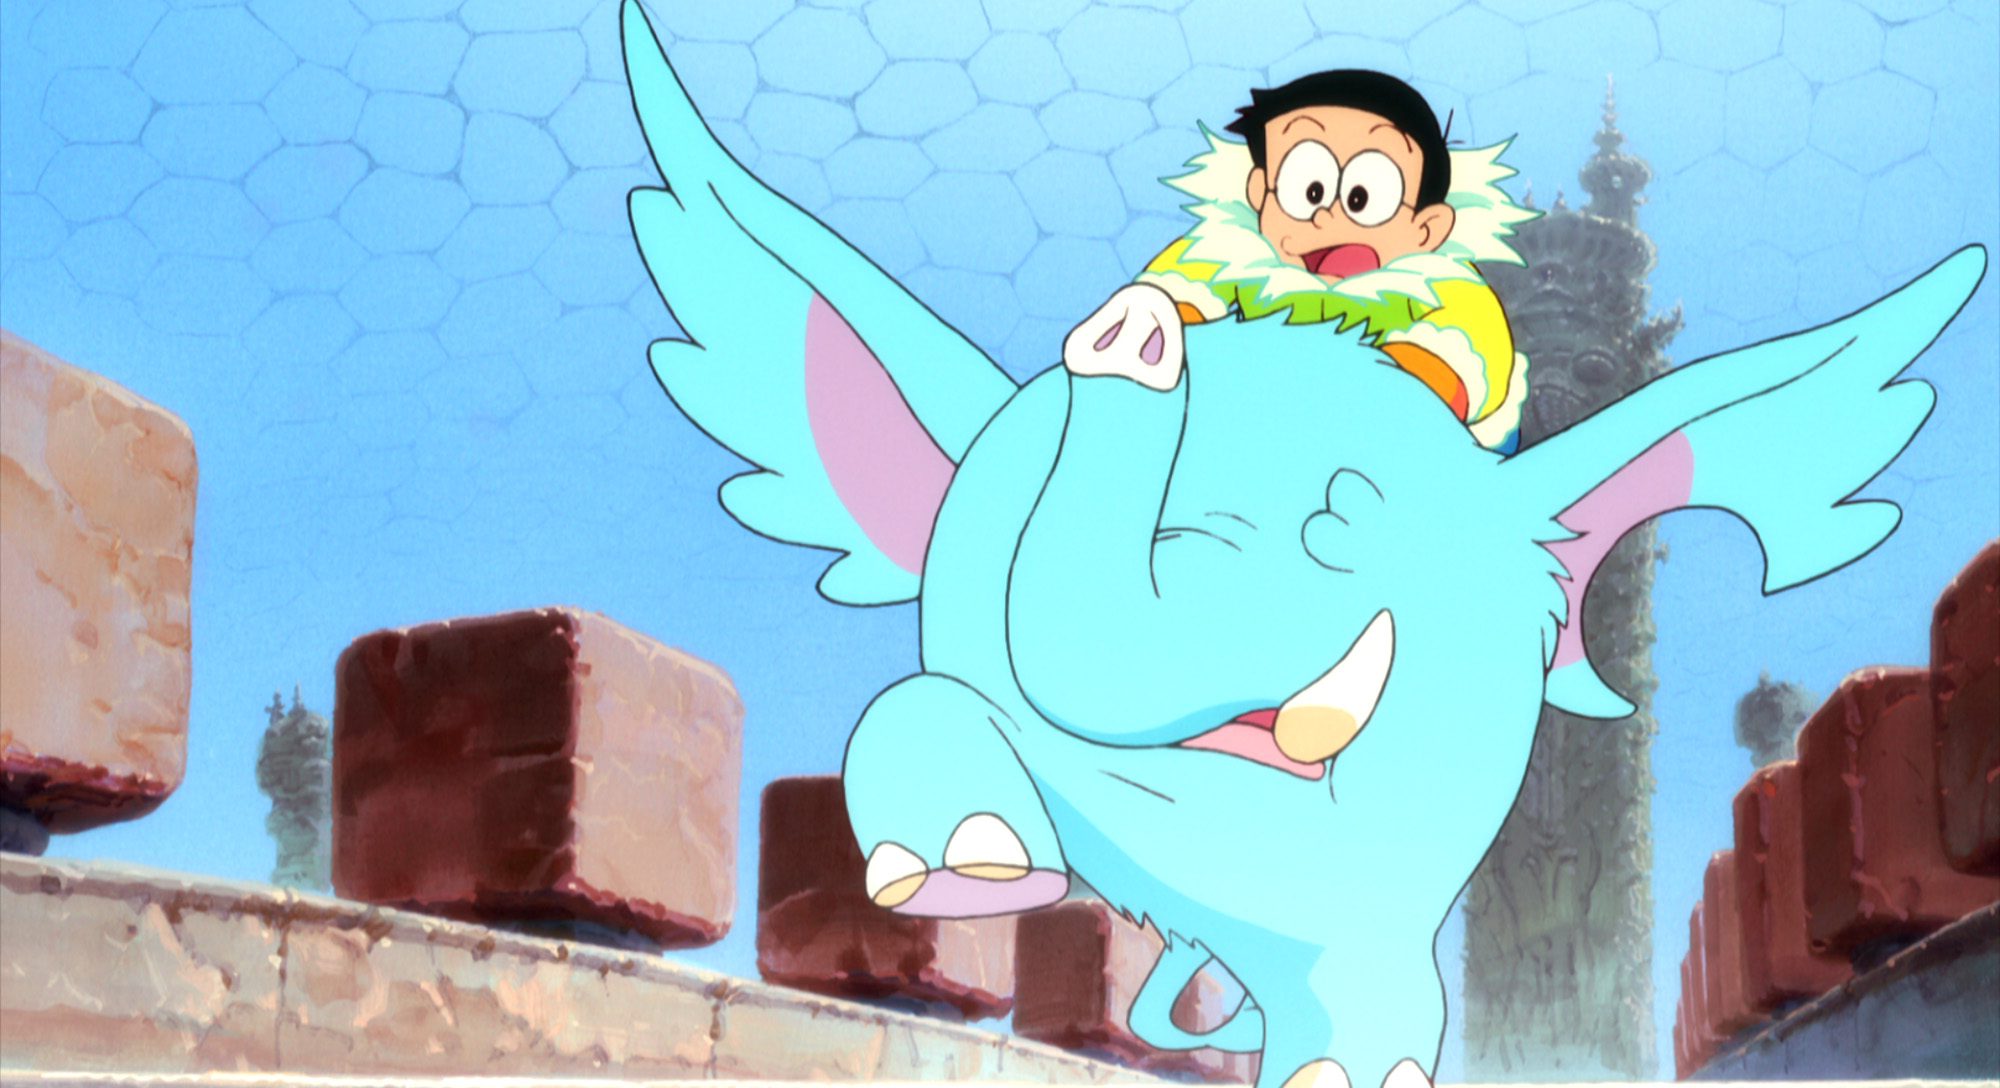 Nobita's new ally in "Doraemon The Movie: Nobita's Great Adventure In The Antarctic Kachi Kochi". (Golden Village Pictures) - marcusgohmarcusgoh